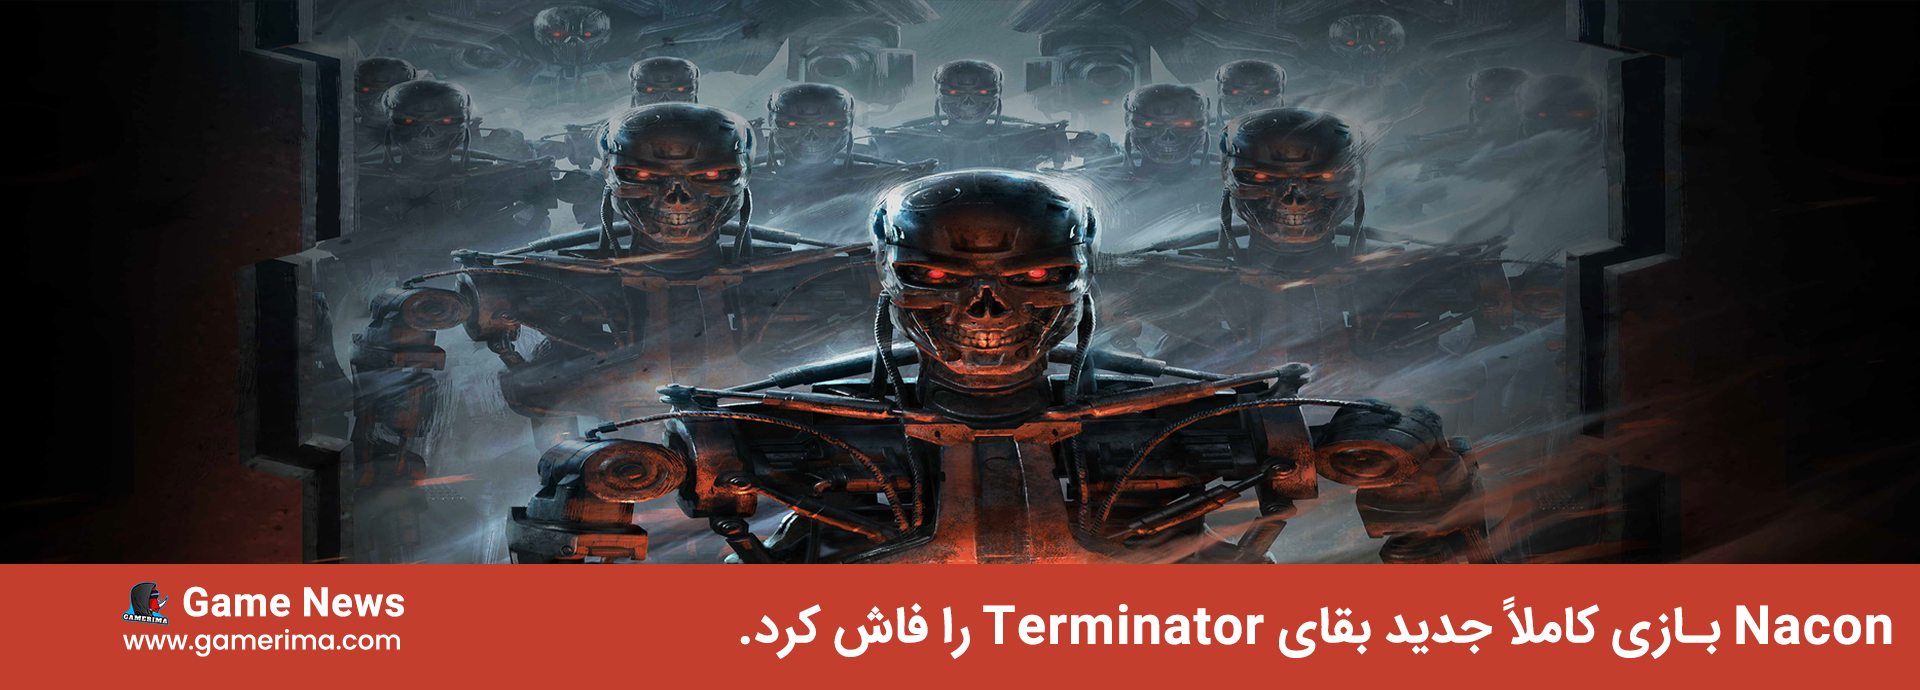 Nacon بازی کاملاً جدید بقای Terminator را فاش کرد.